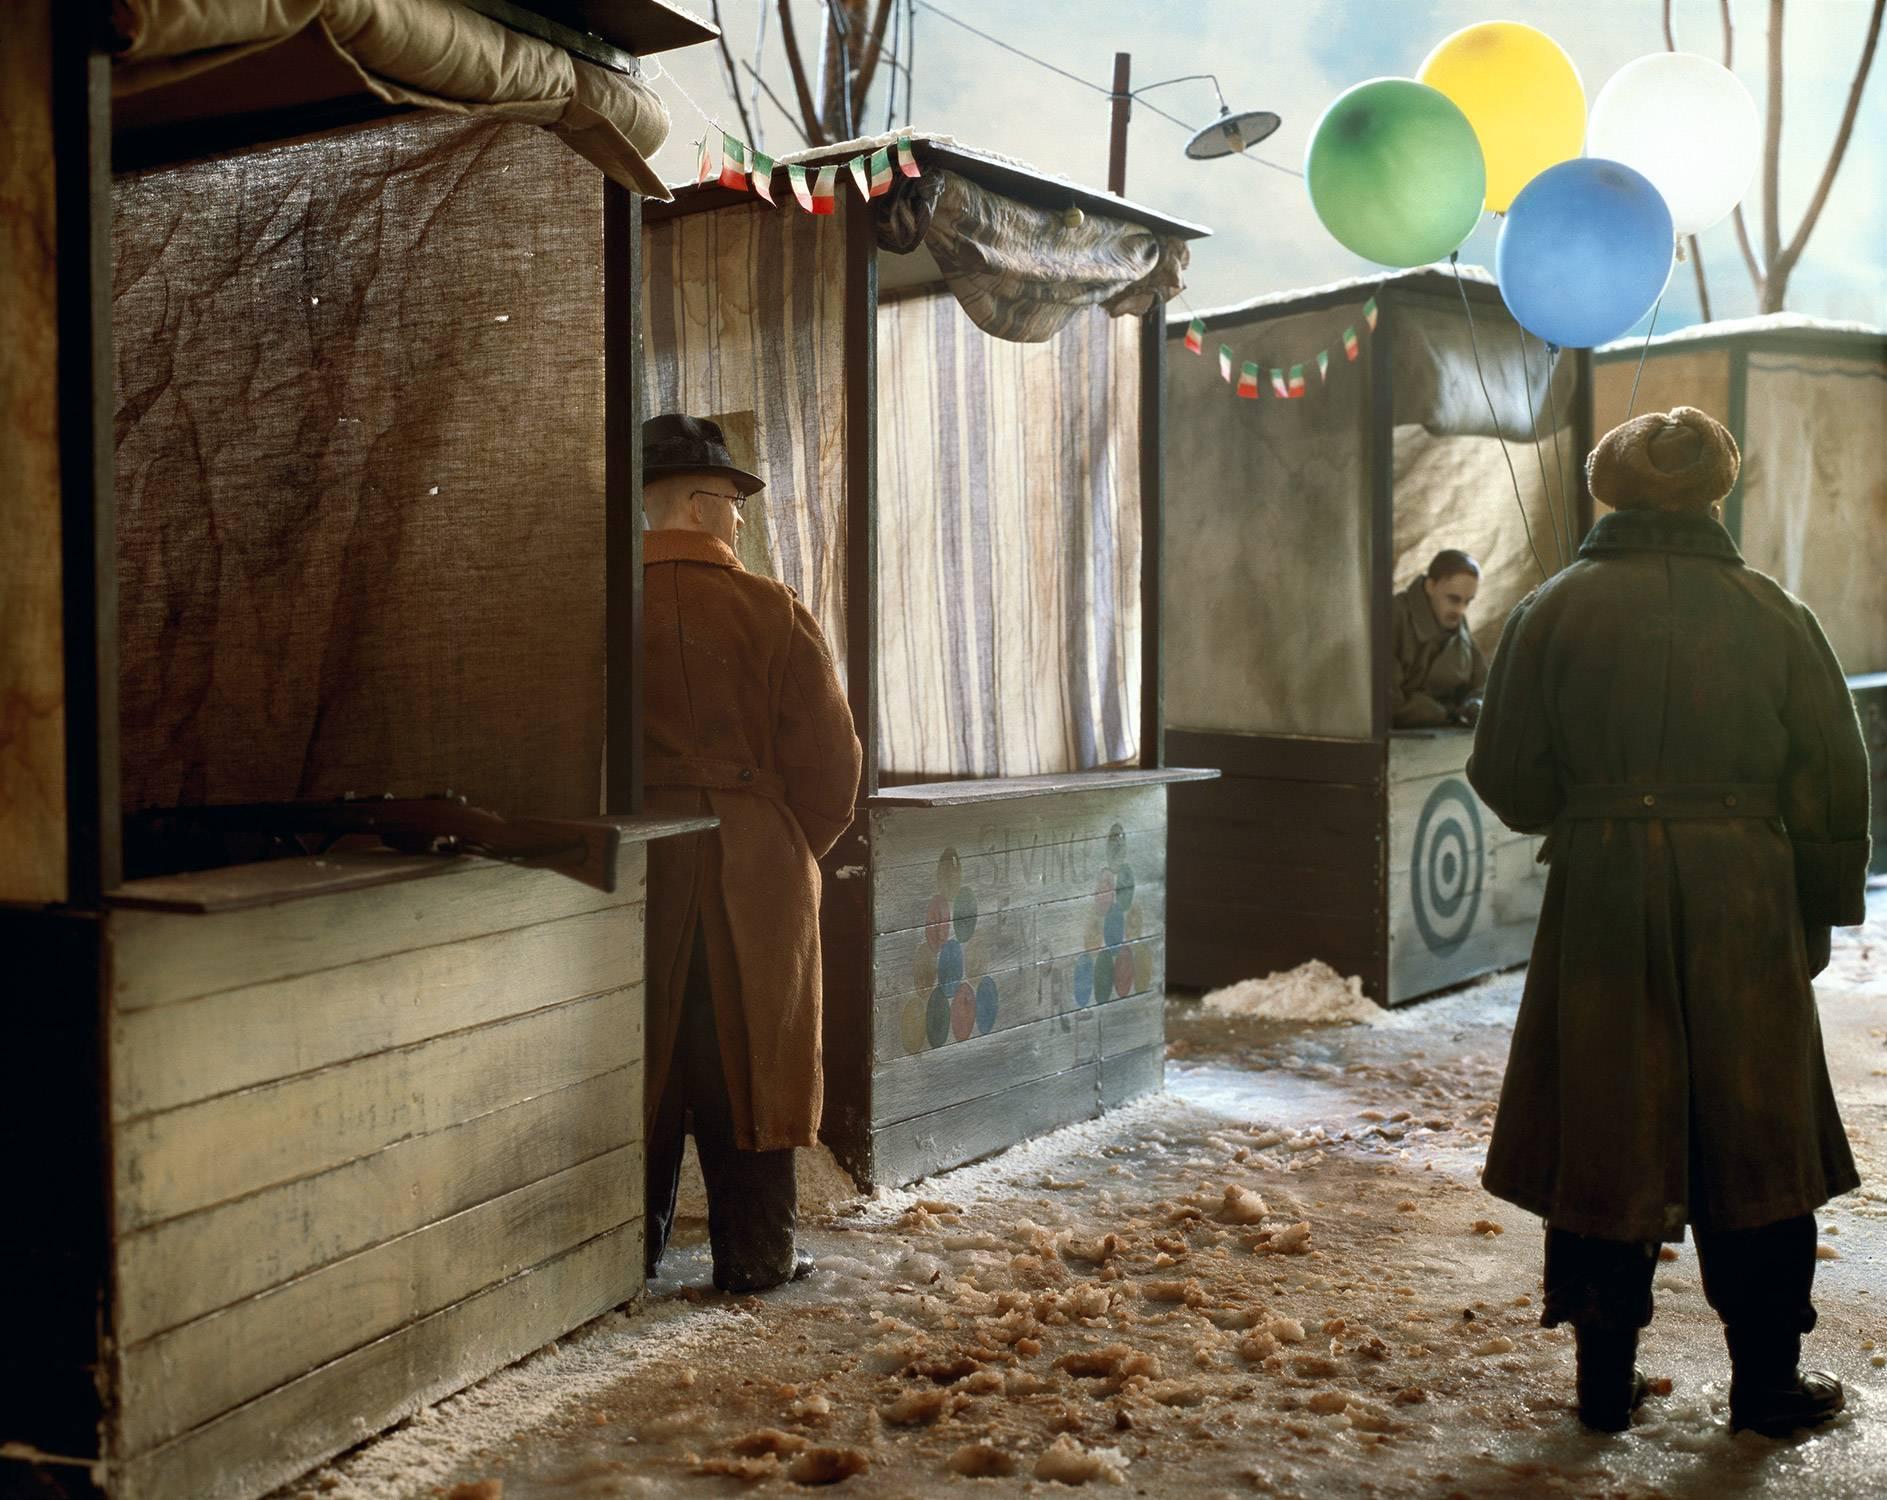 Paolo Ventura Still-Life Photograph - Winter Stories #30